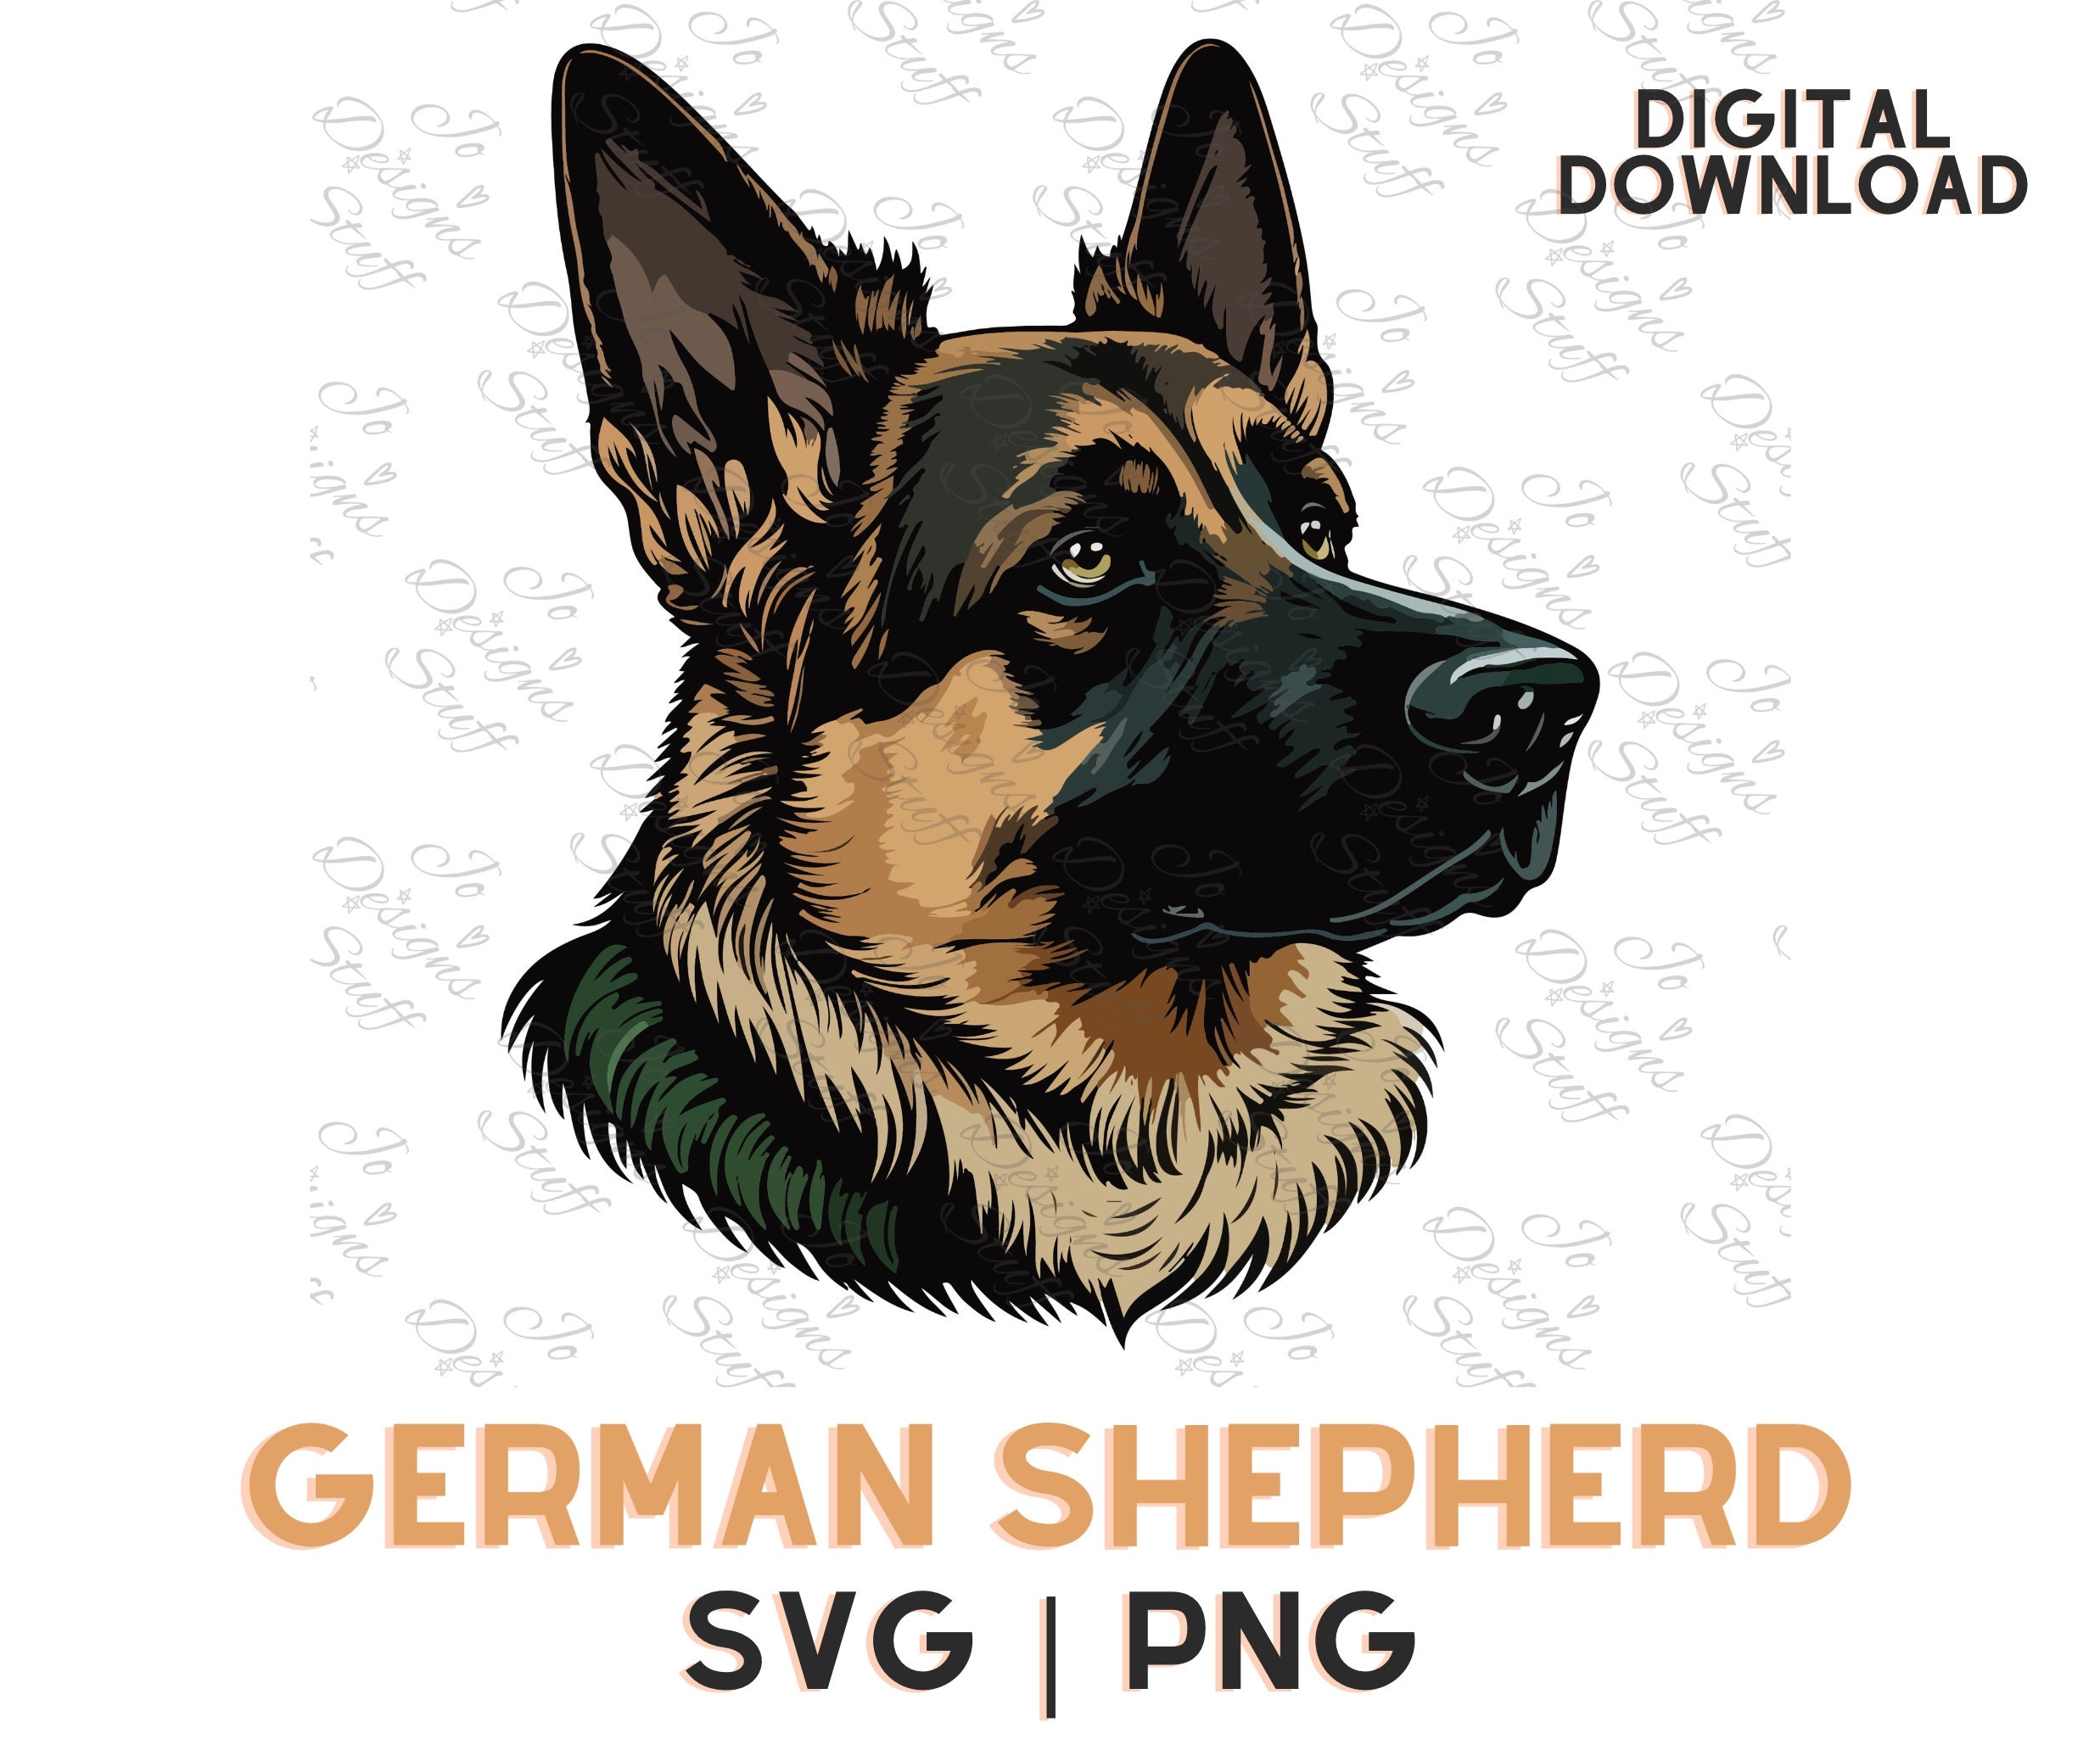 German Shepherd Svg, High Resolution German Shepherd Clipart, Cute Dog ...